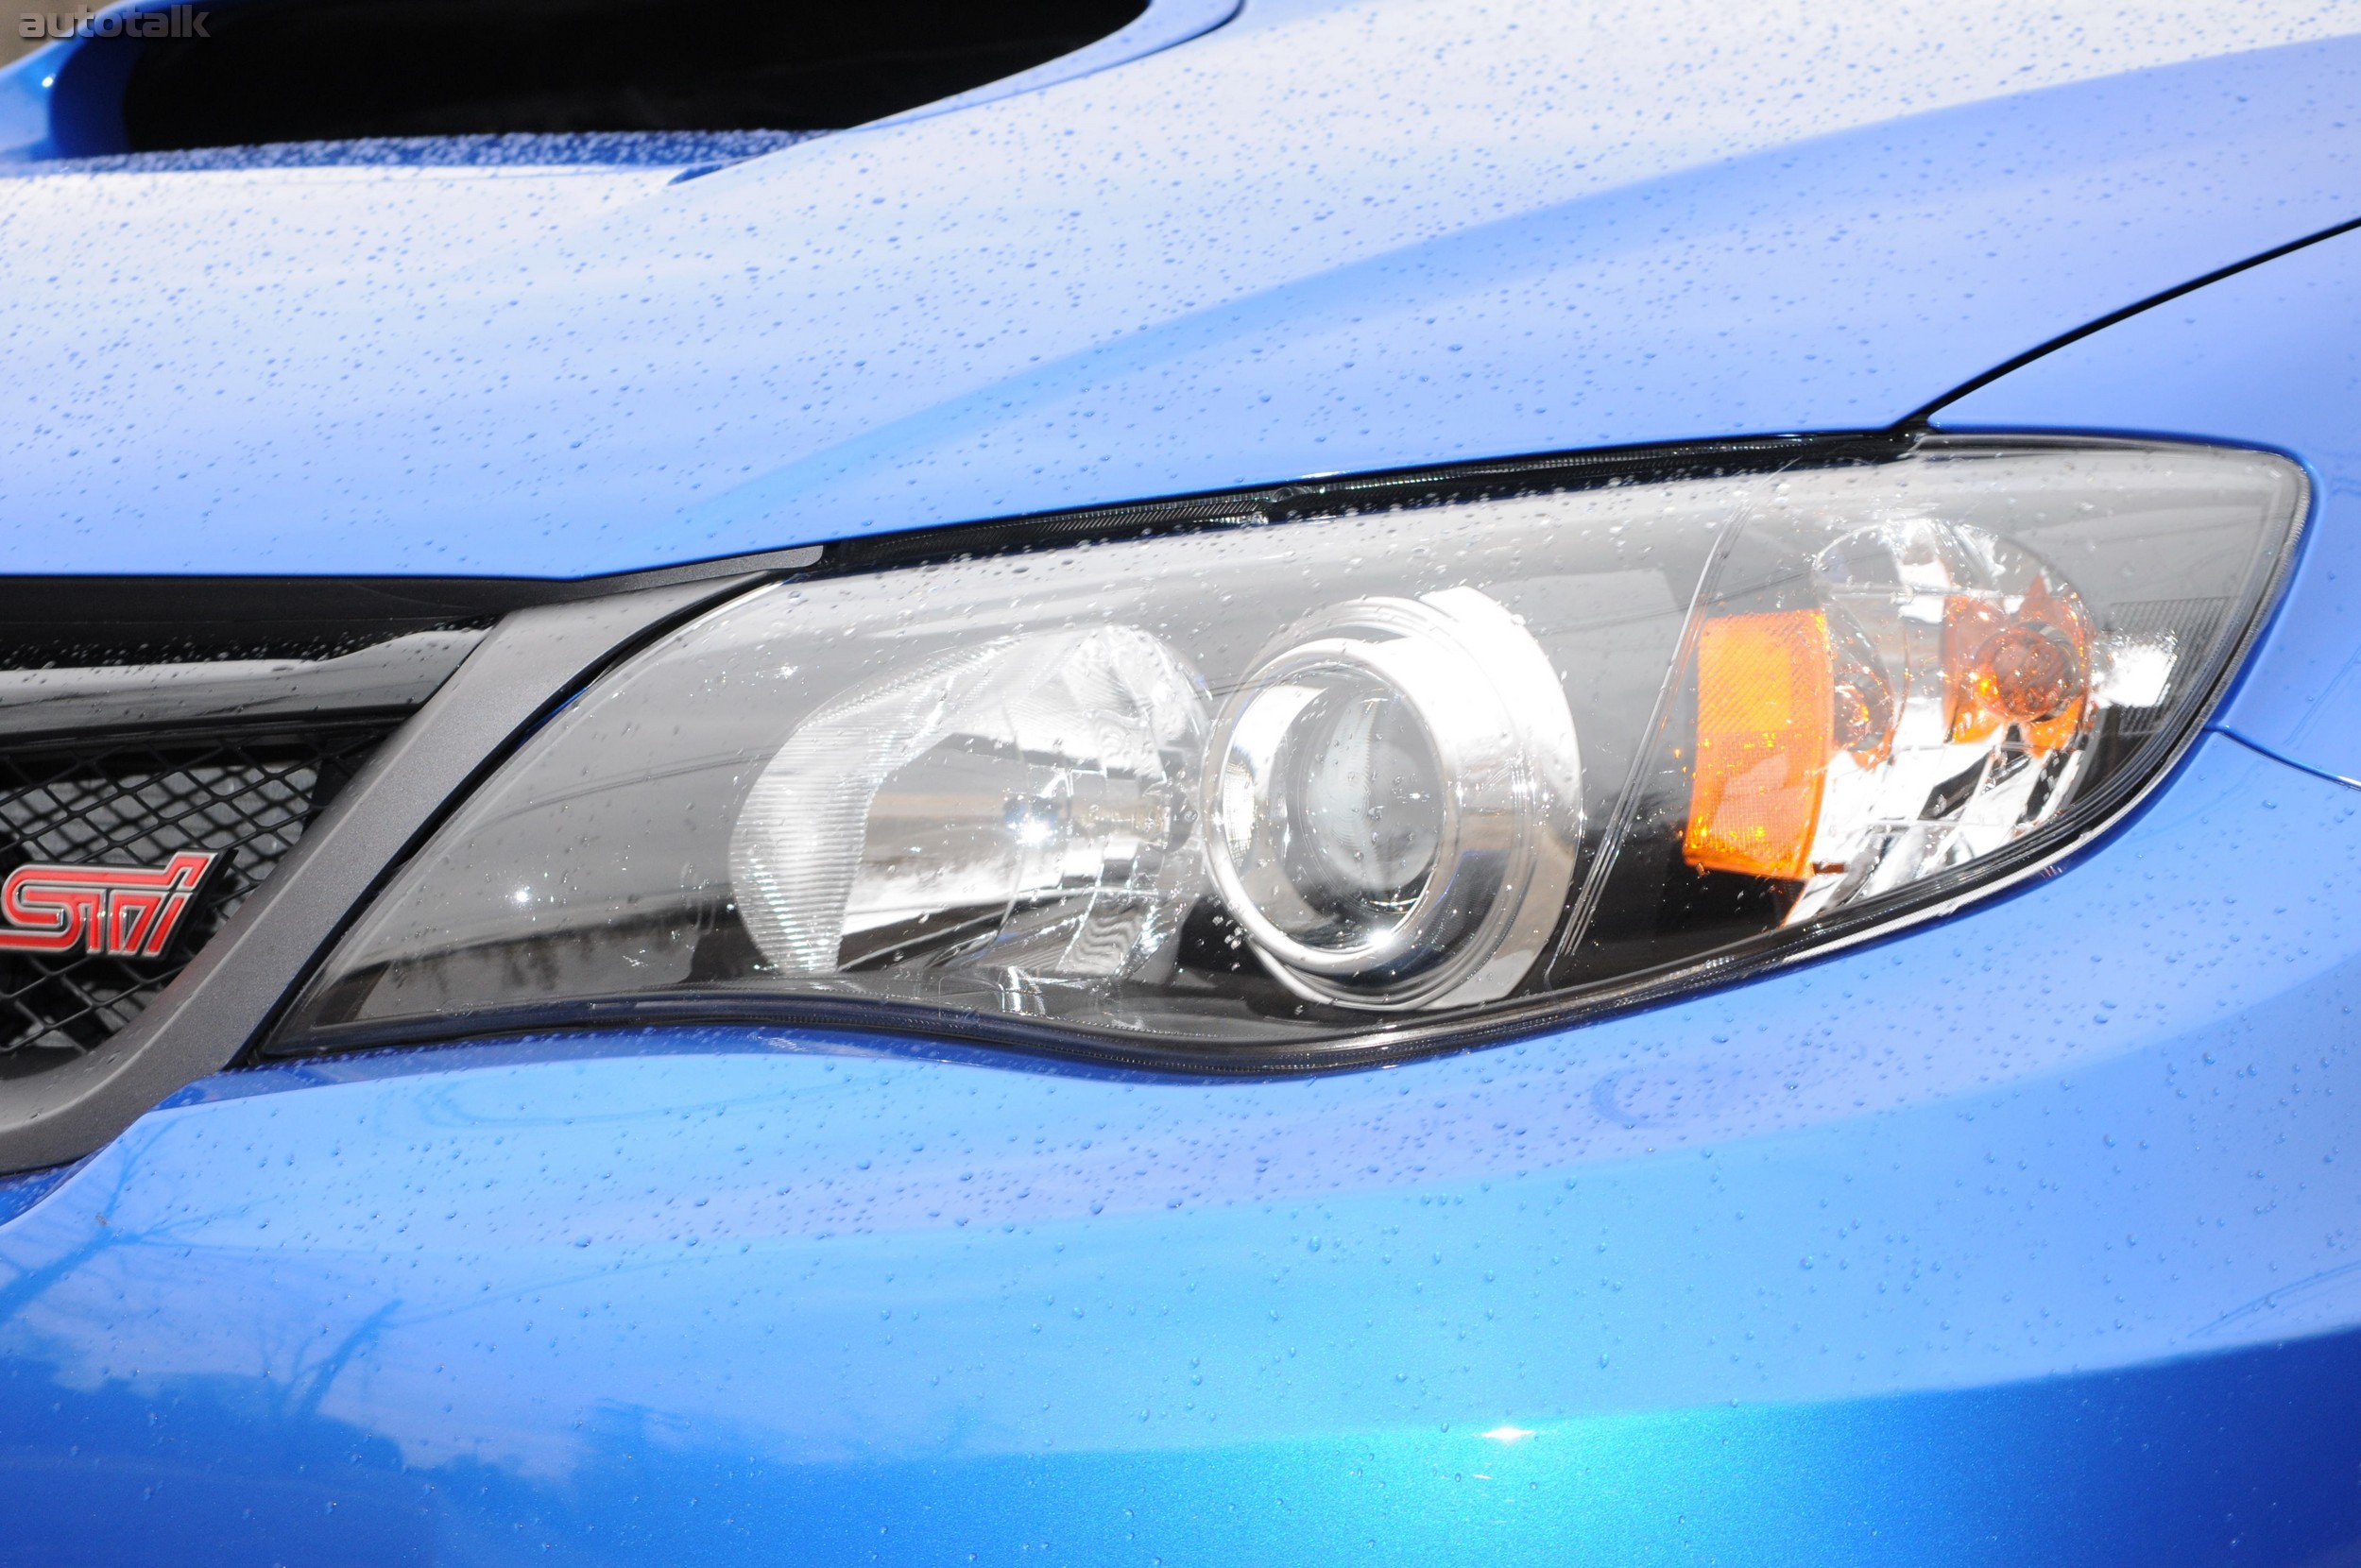 2011 Subaru Impreza WRX STI Review